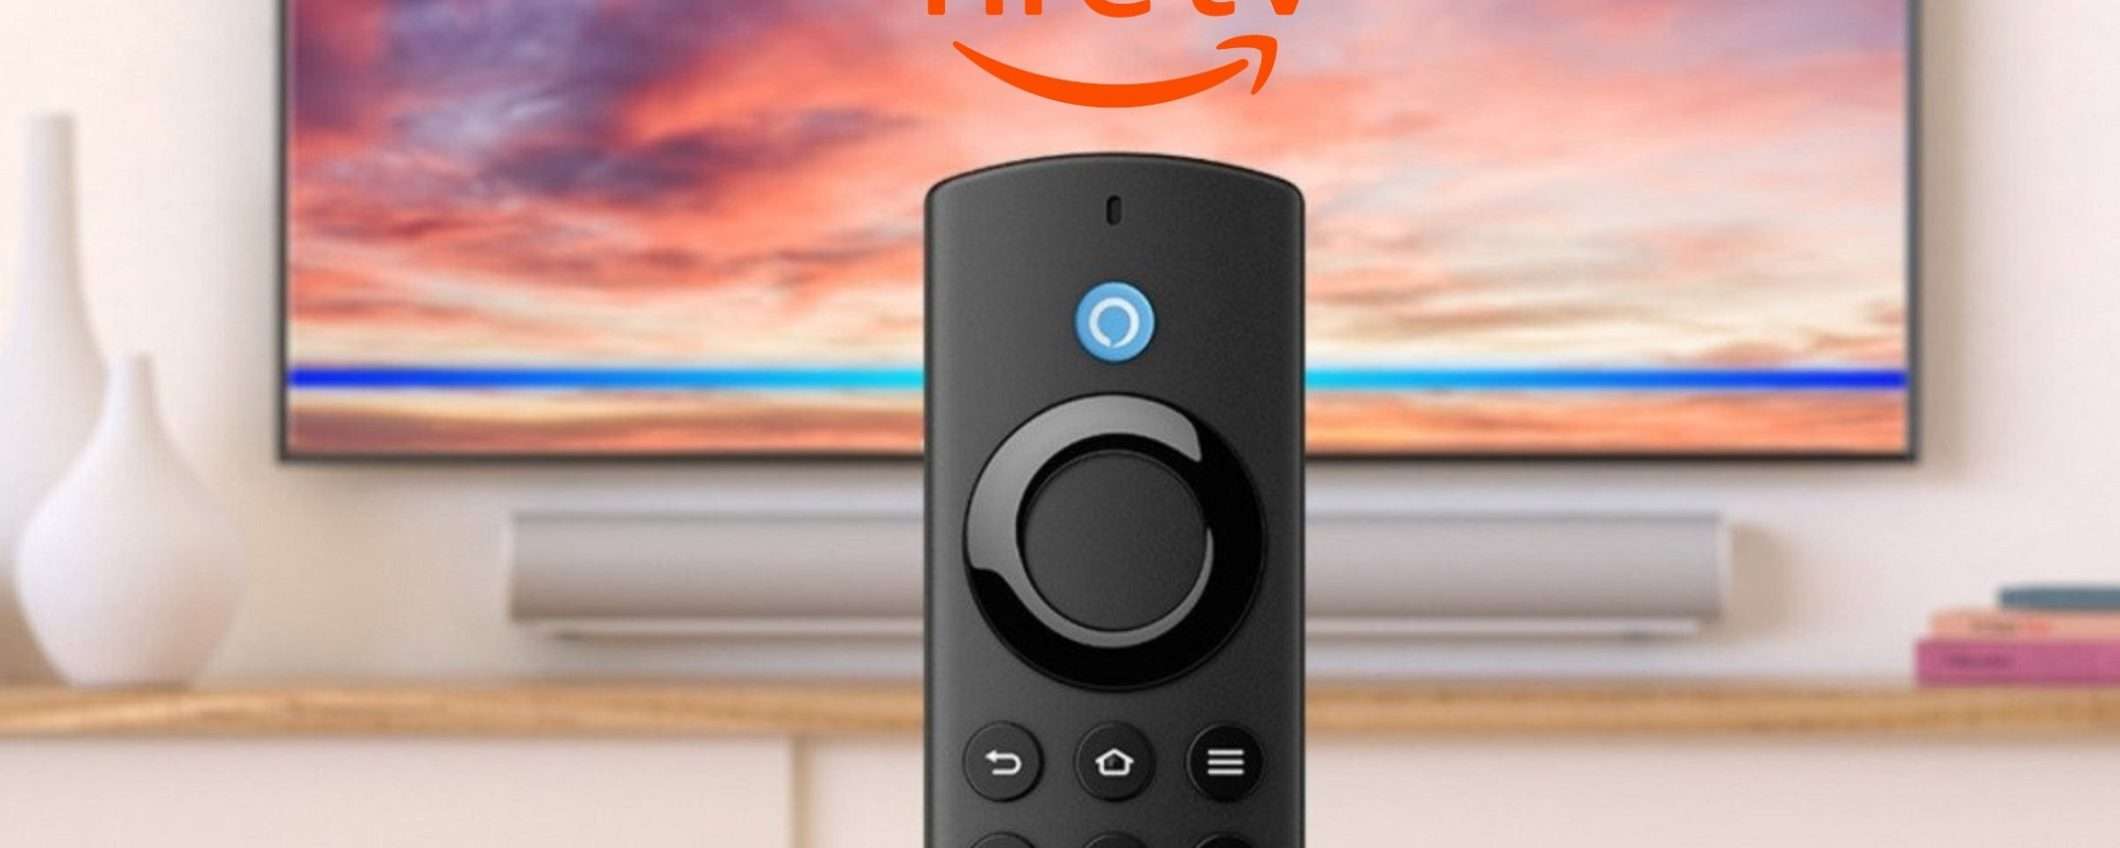 Fire TV Stick Lite in offerta a 26,99€: è il BEST BUY di oggi su Amazon